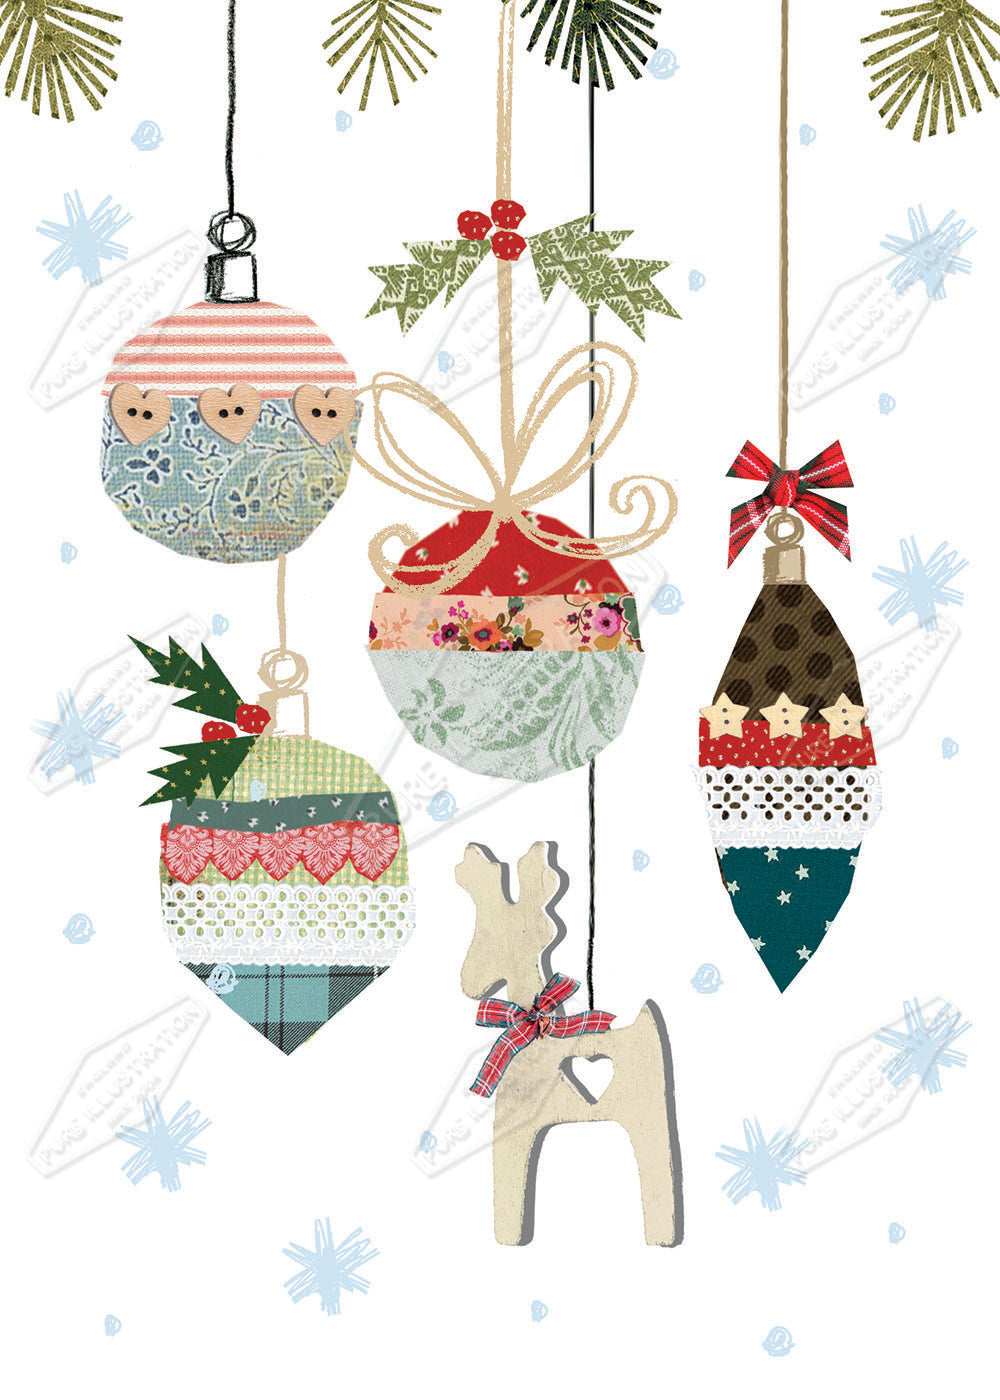 00032056DEV - Deva Evans is represented by Pure Art Licensing Agency - Christmas Greeting Card Design